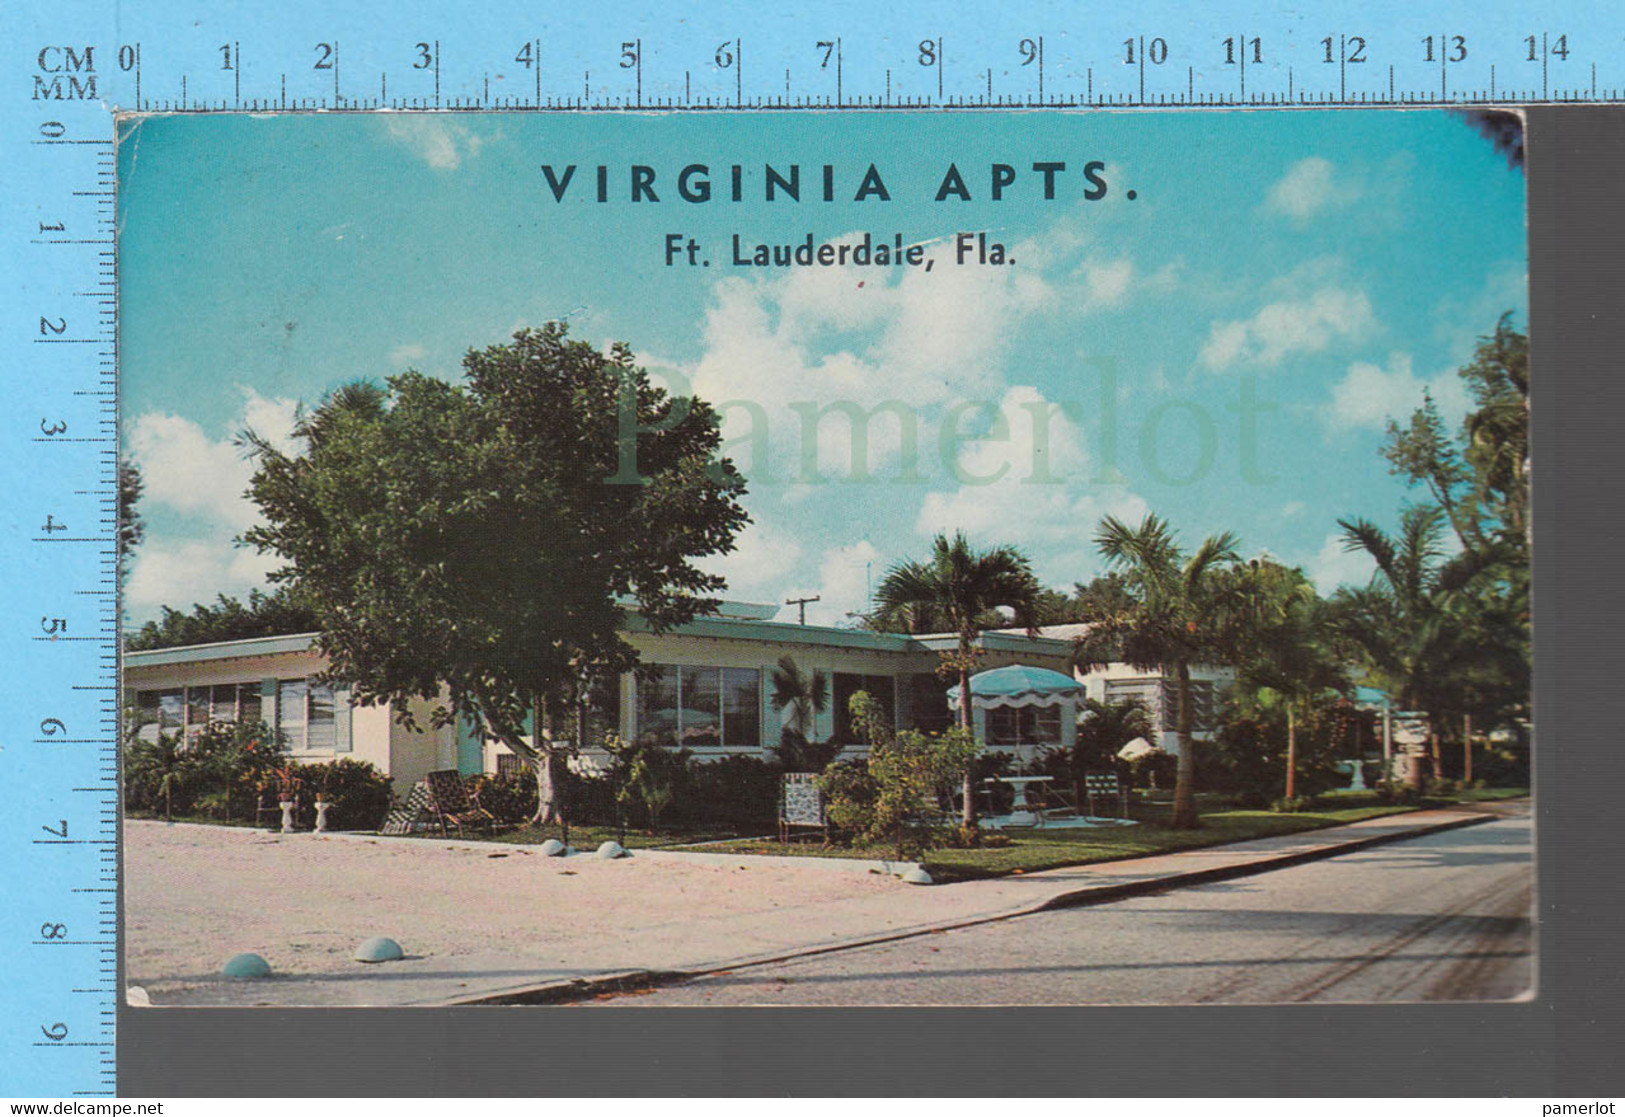 USA Florida Ft. Lauderdale - Virginia Apt - Cover Postal Service FL 333 2A 1971 - Fort Lauderdale